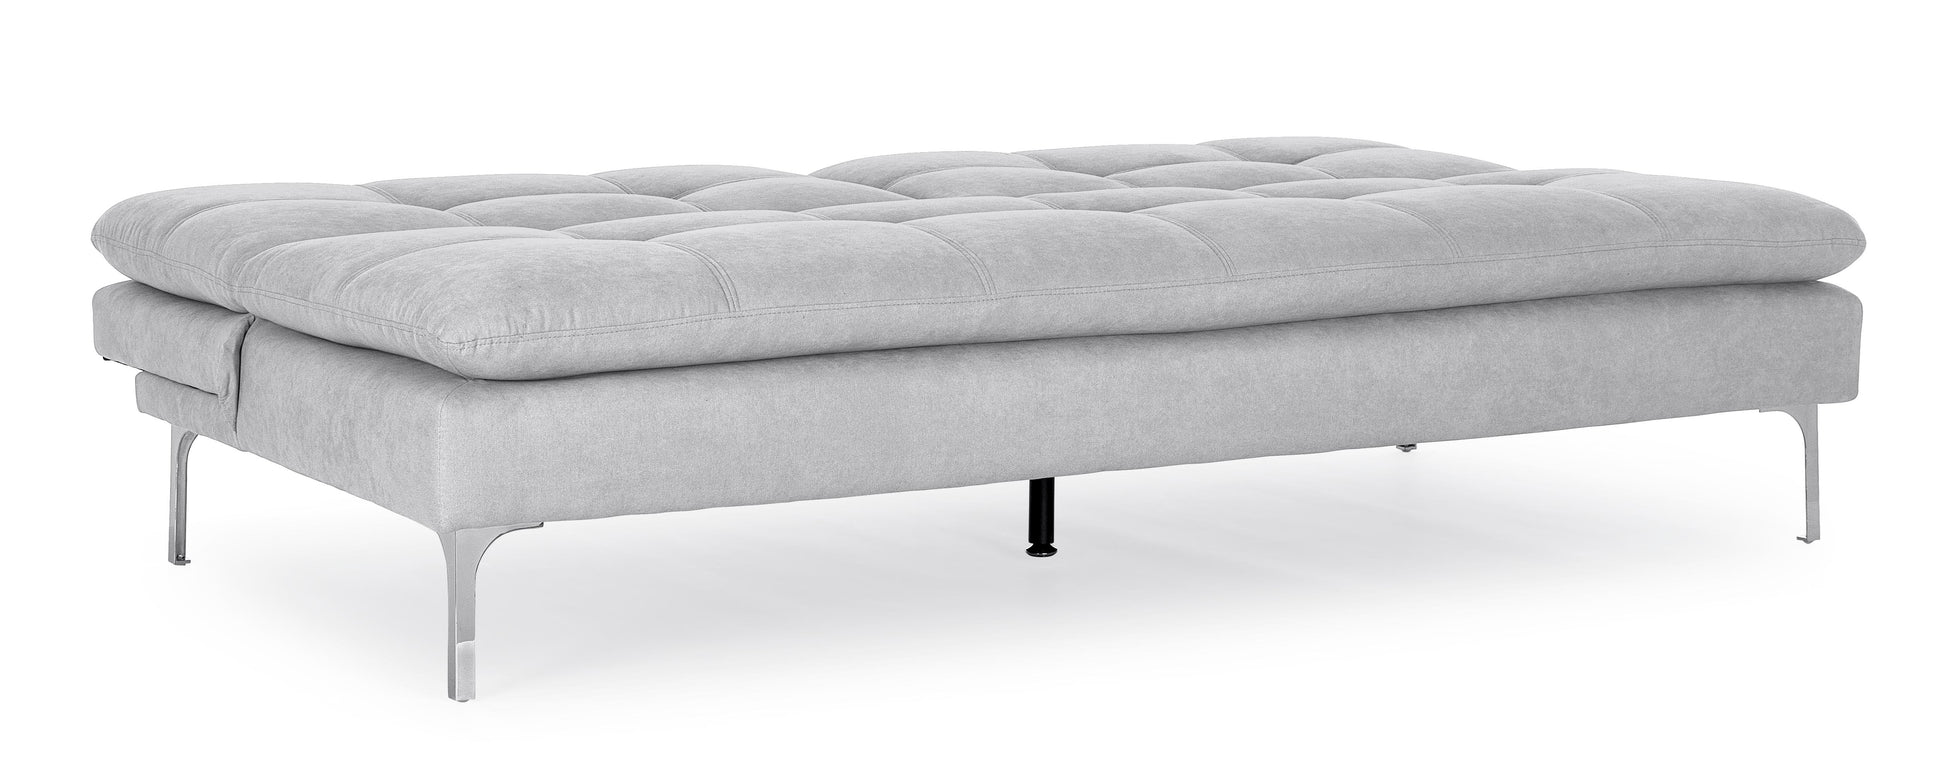 Fabric Sofa Bed